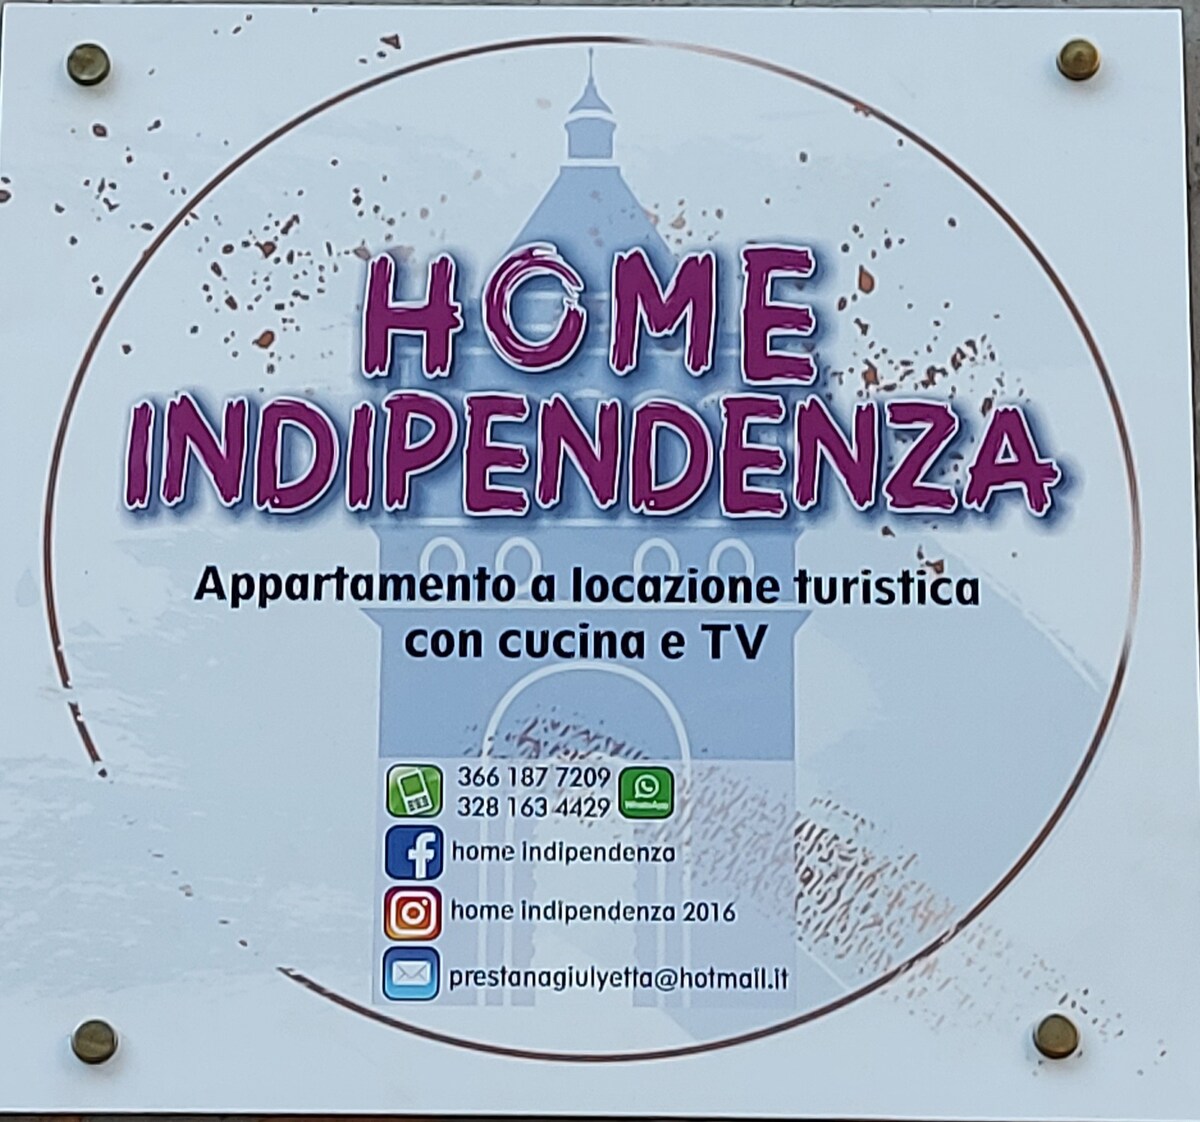 独立广场（ Piazza Independenza ）的两栋房屋